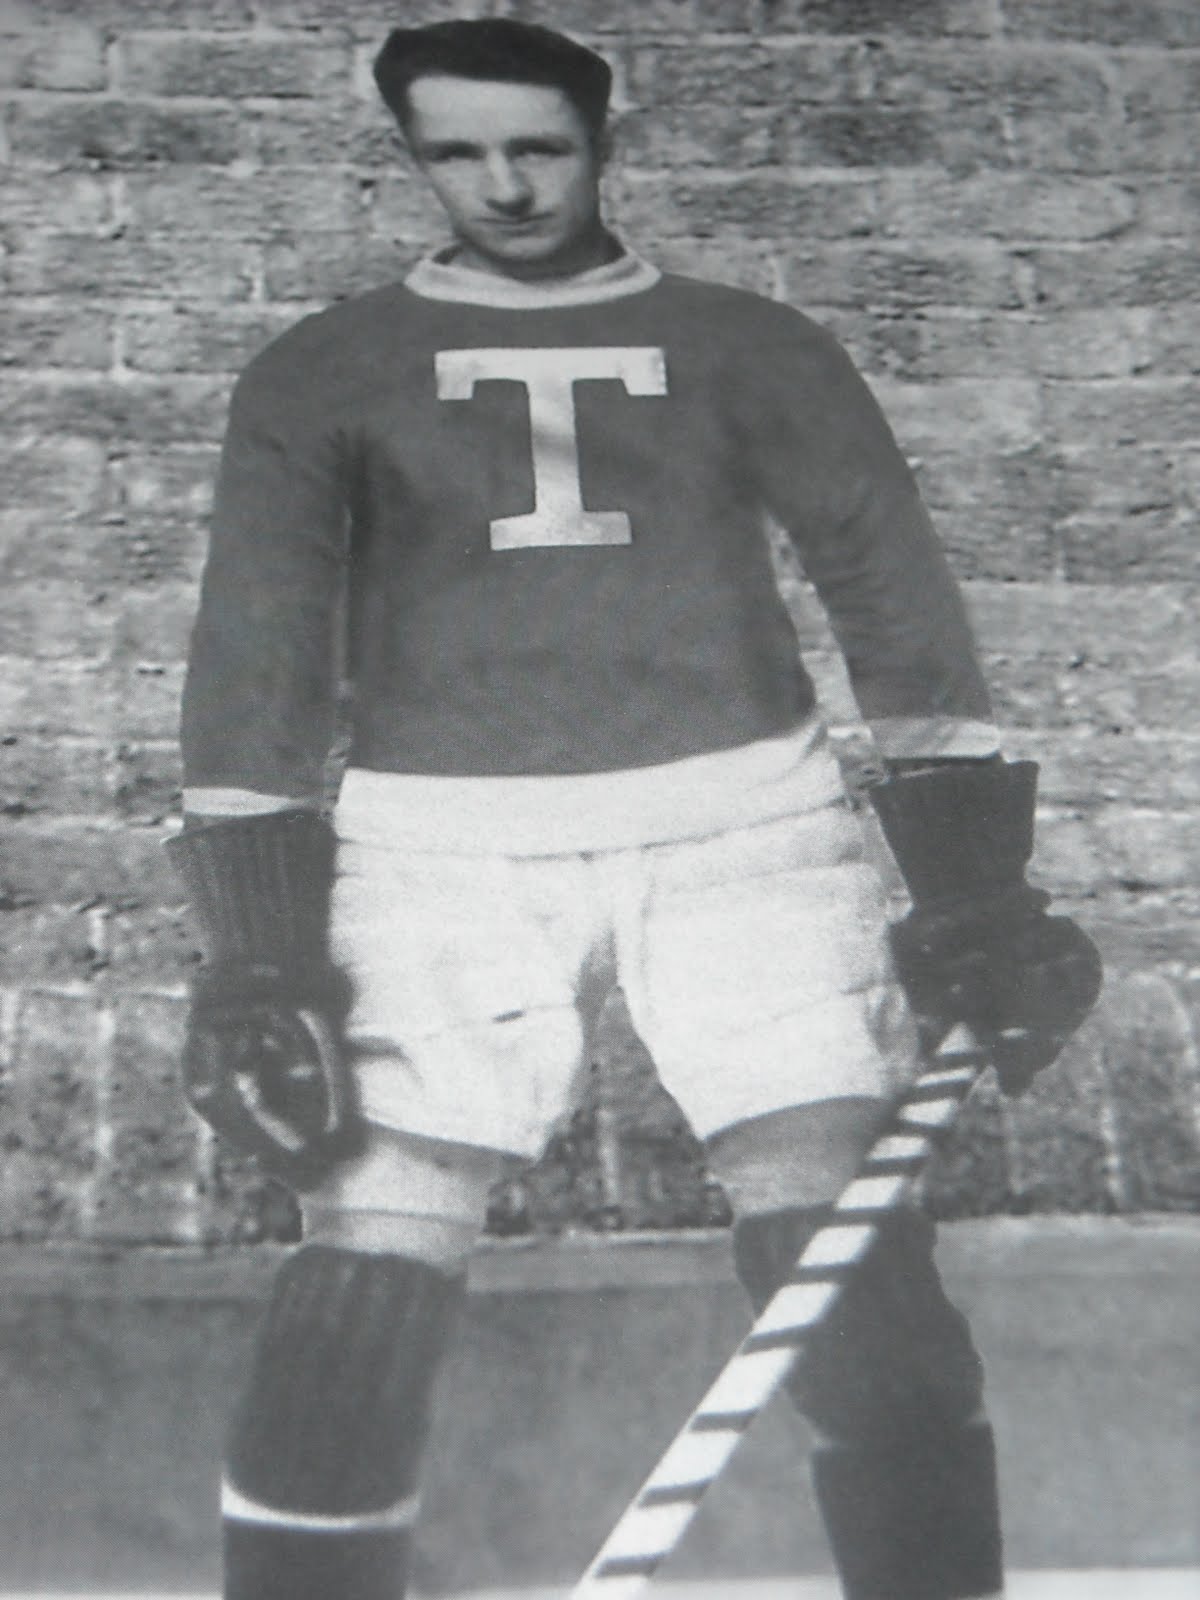 Antti Niemi Jersey - 1930 Chicago Blackhawks Vintage NHL Hockey Jersey